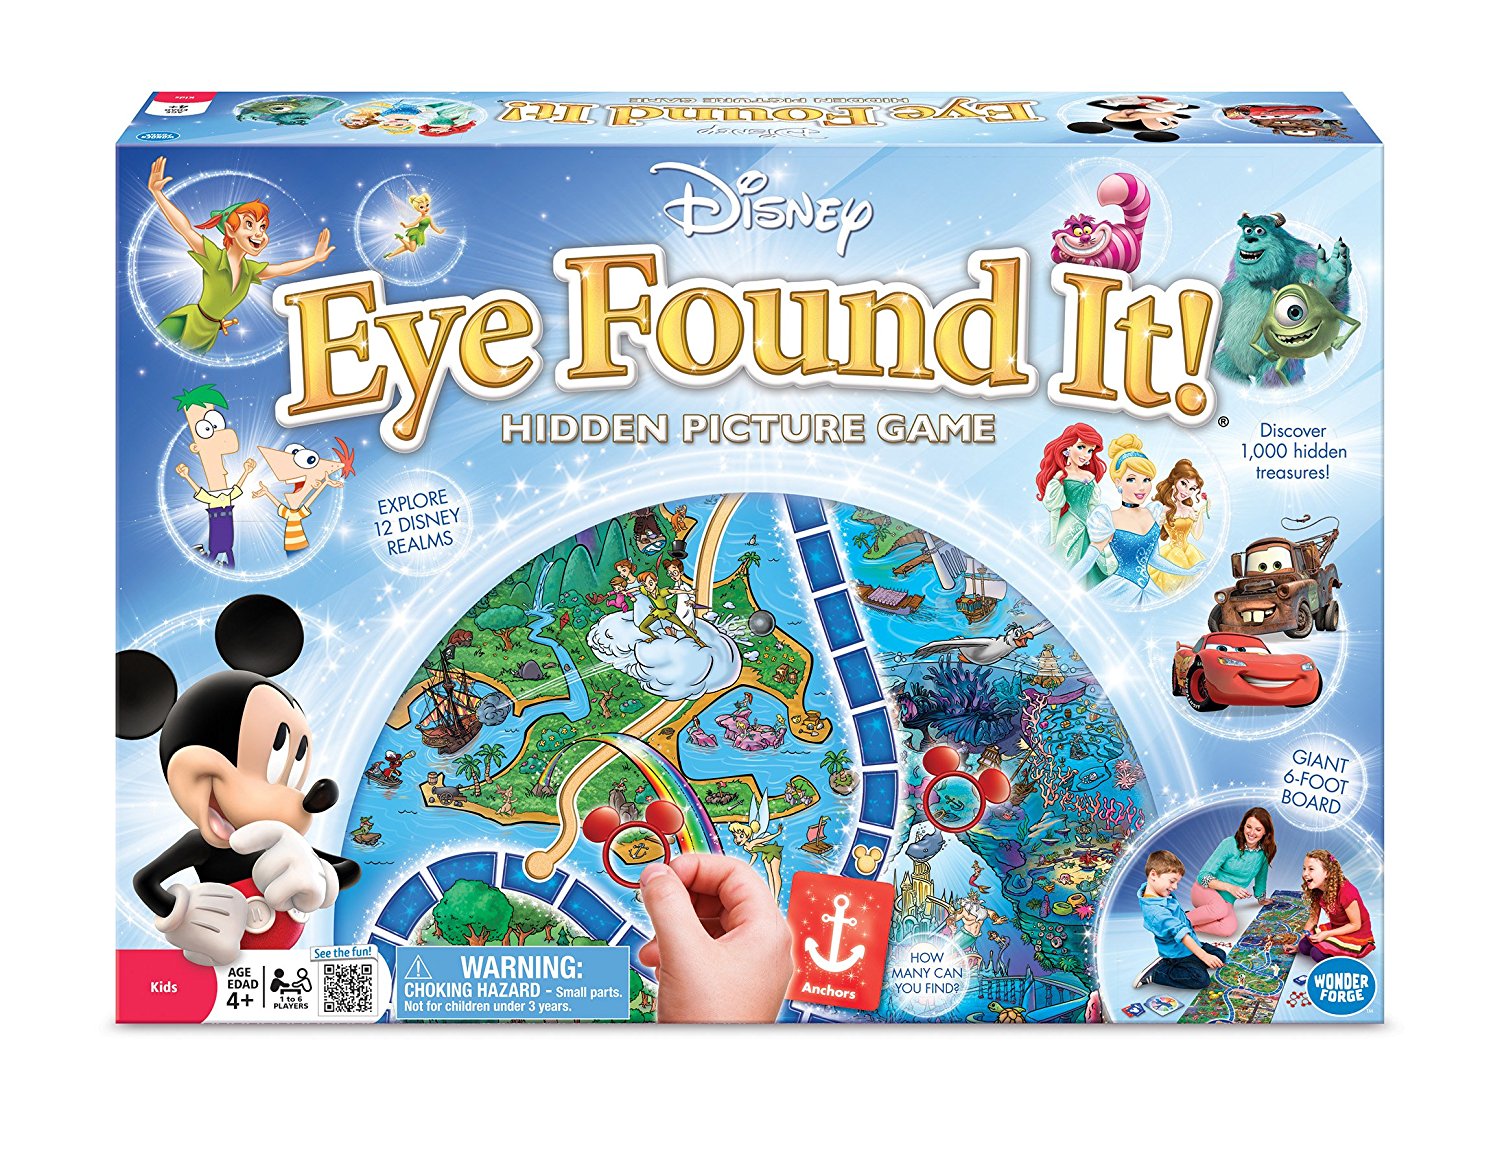 World of Disney Eye Found It Board Game Only $9.99! (Reg $19.99)